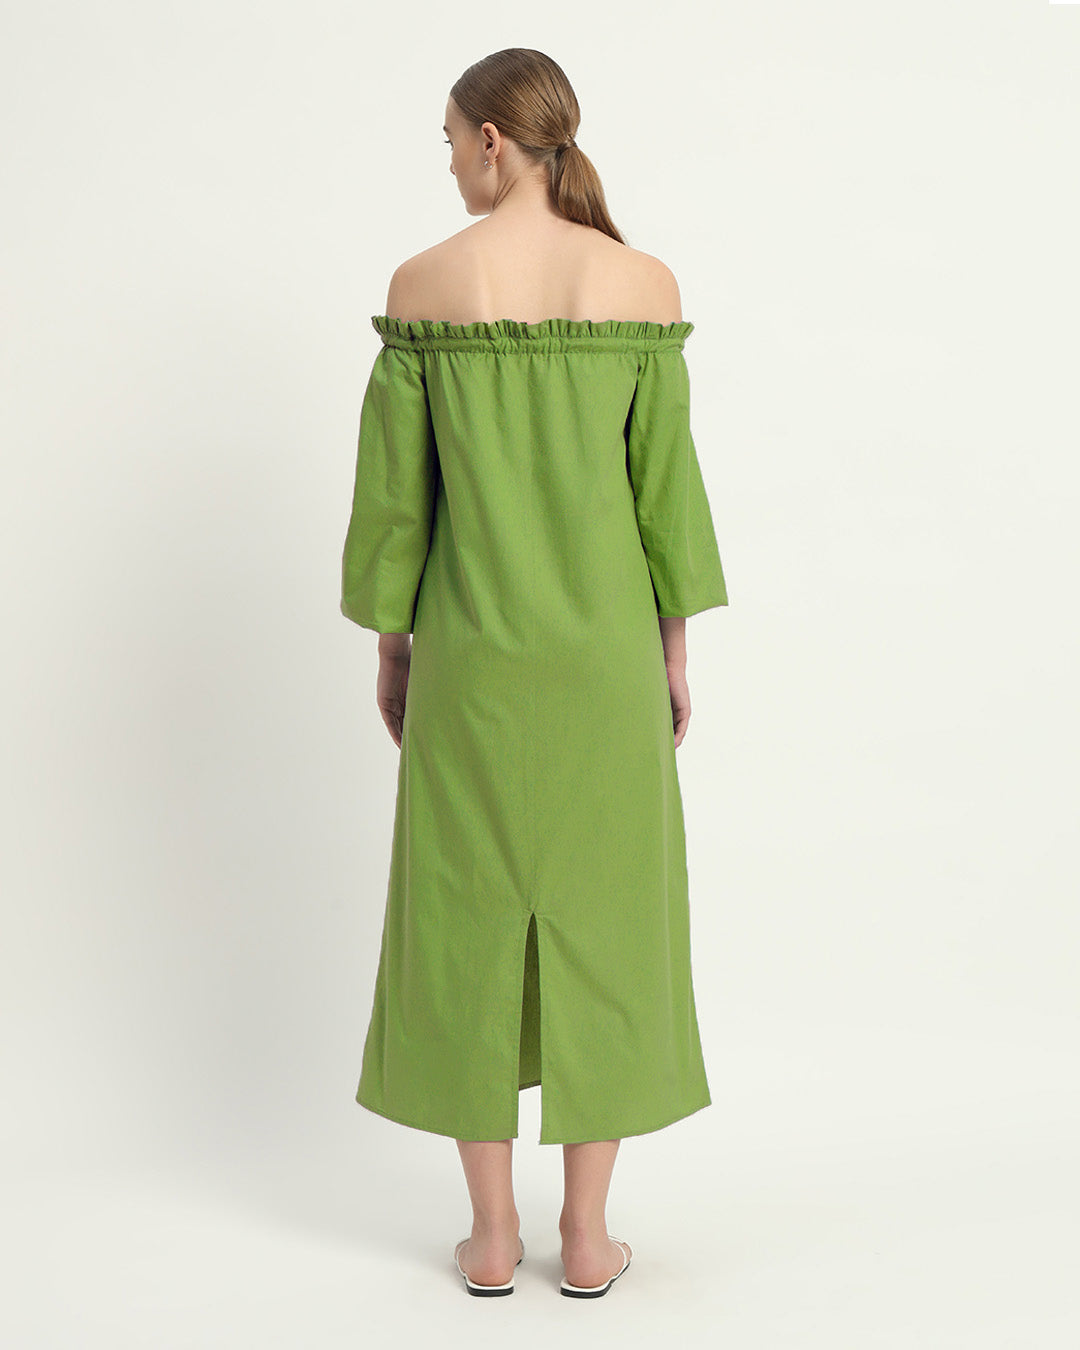 The Fern Carlisle Cotton Dress